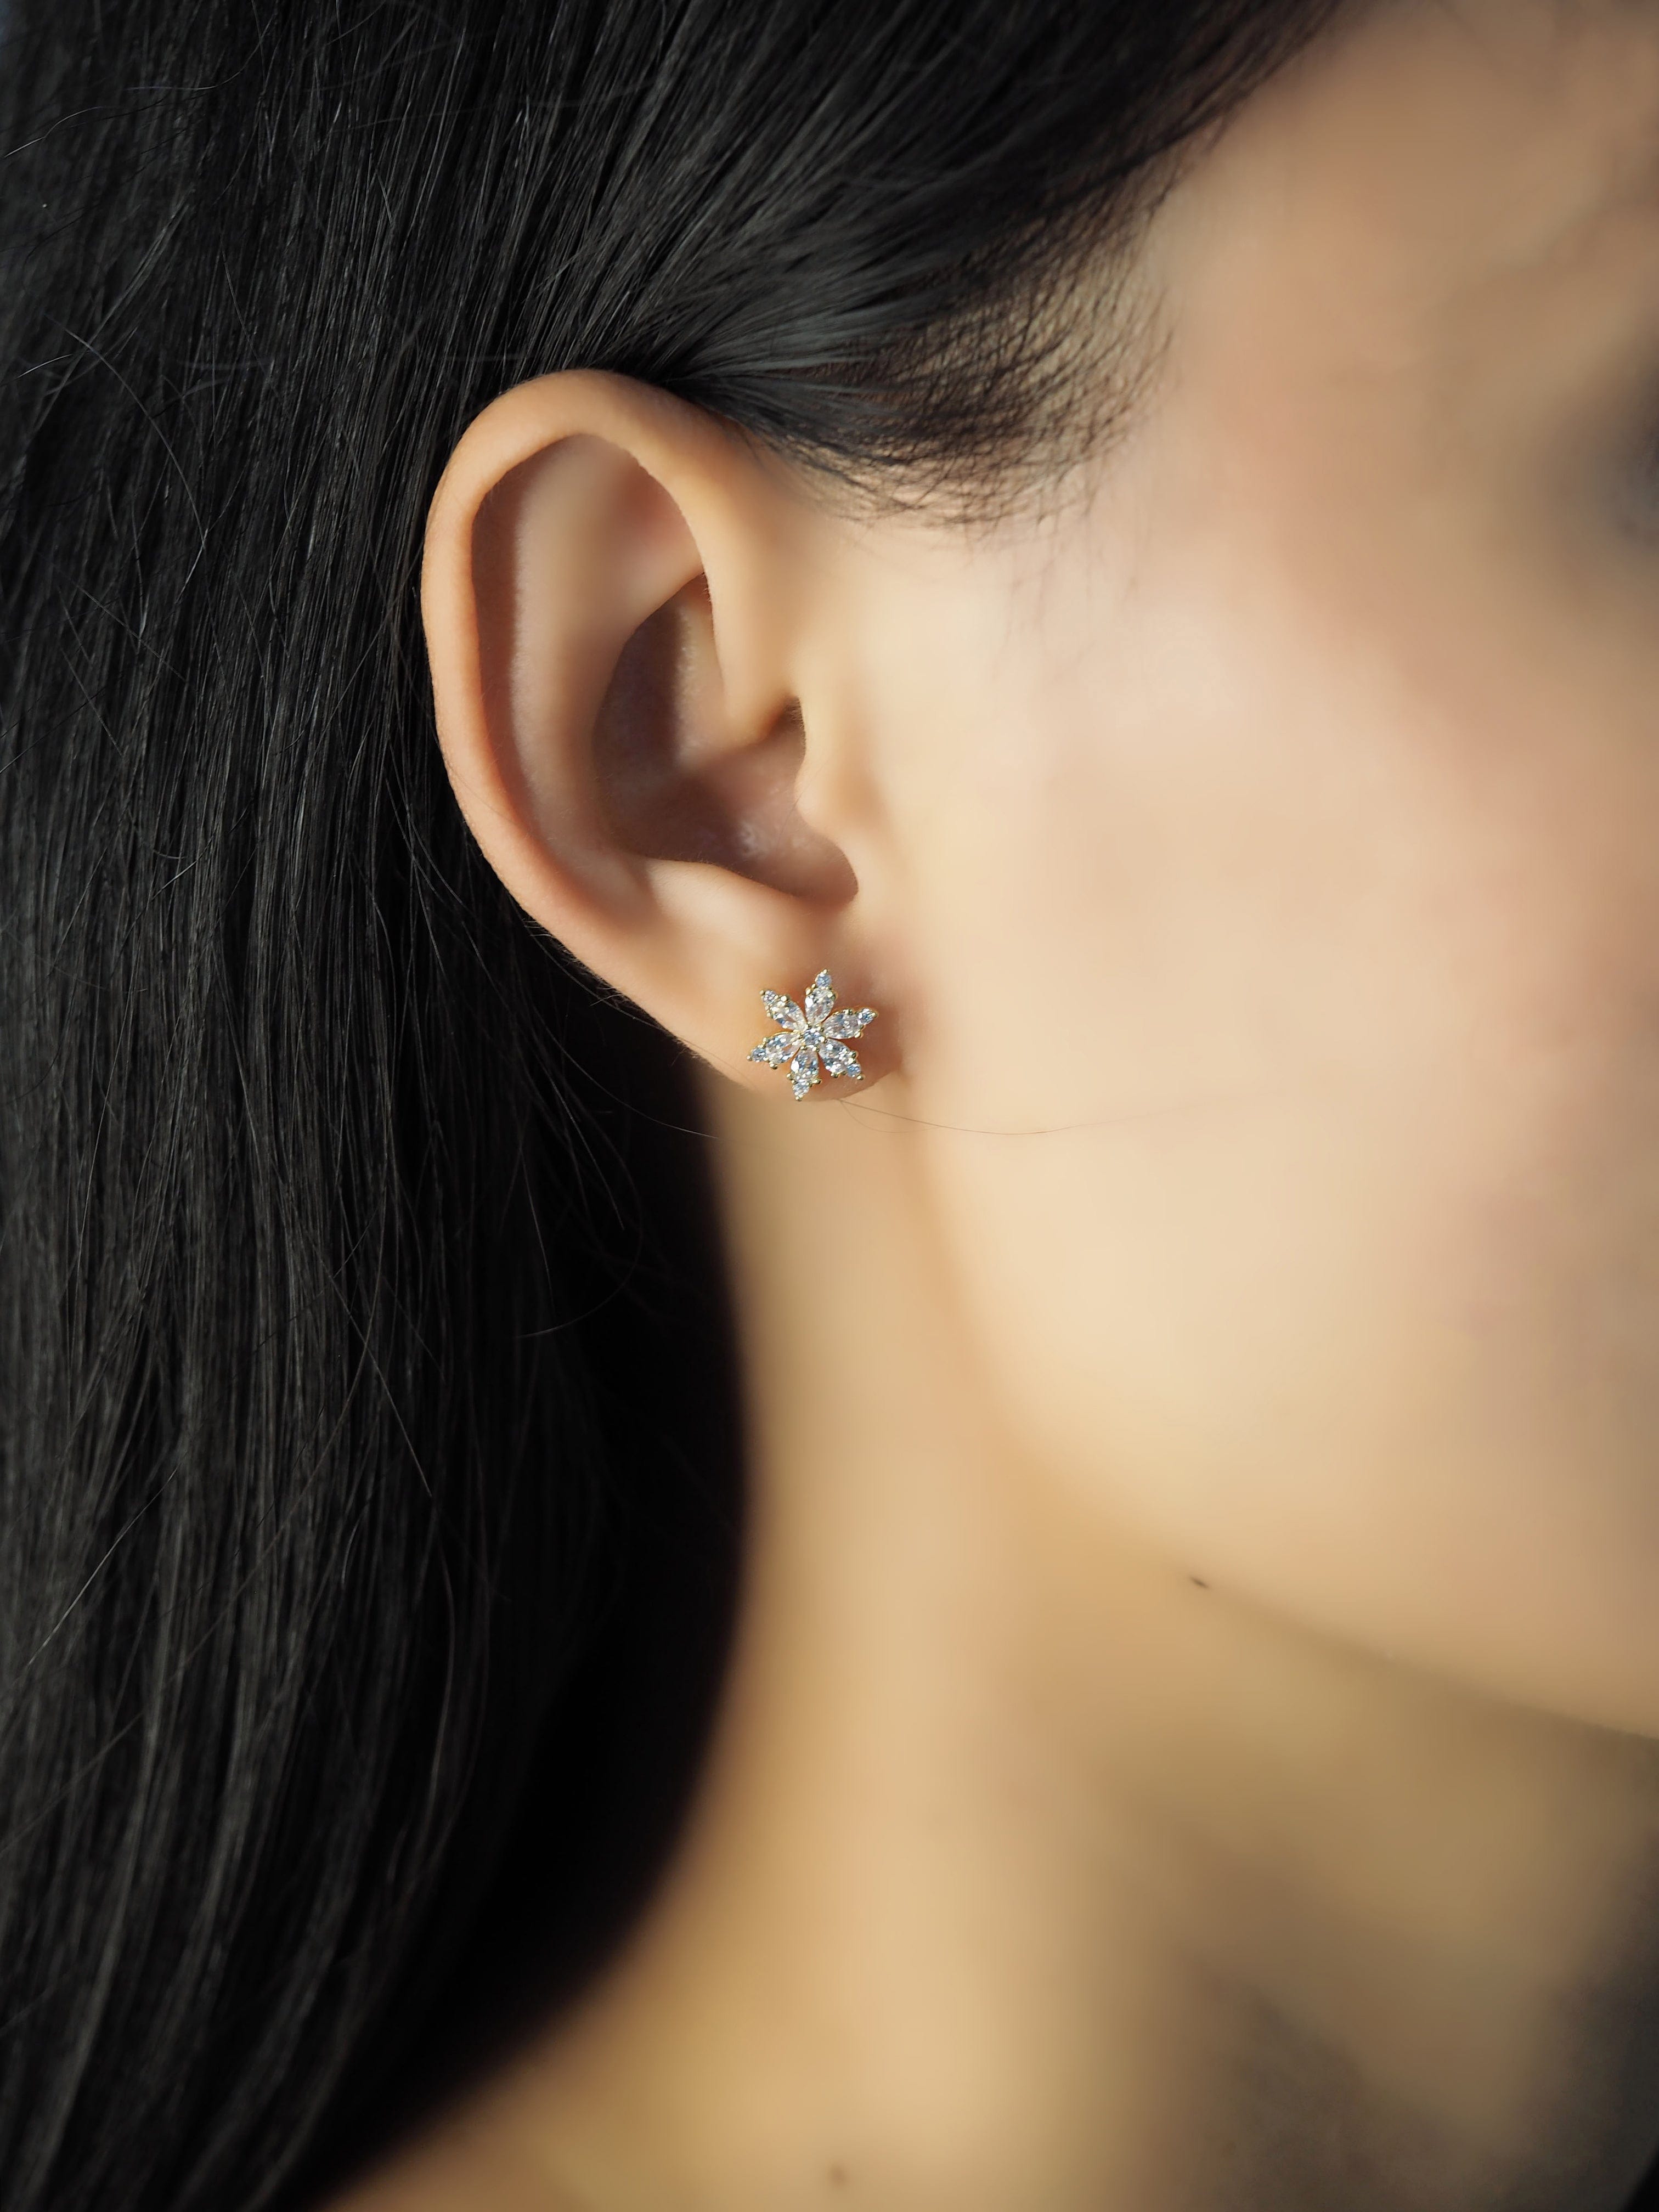 TAI JEWELRY Earrings Cz Snowflake Studs